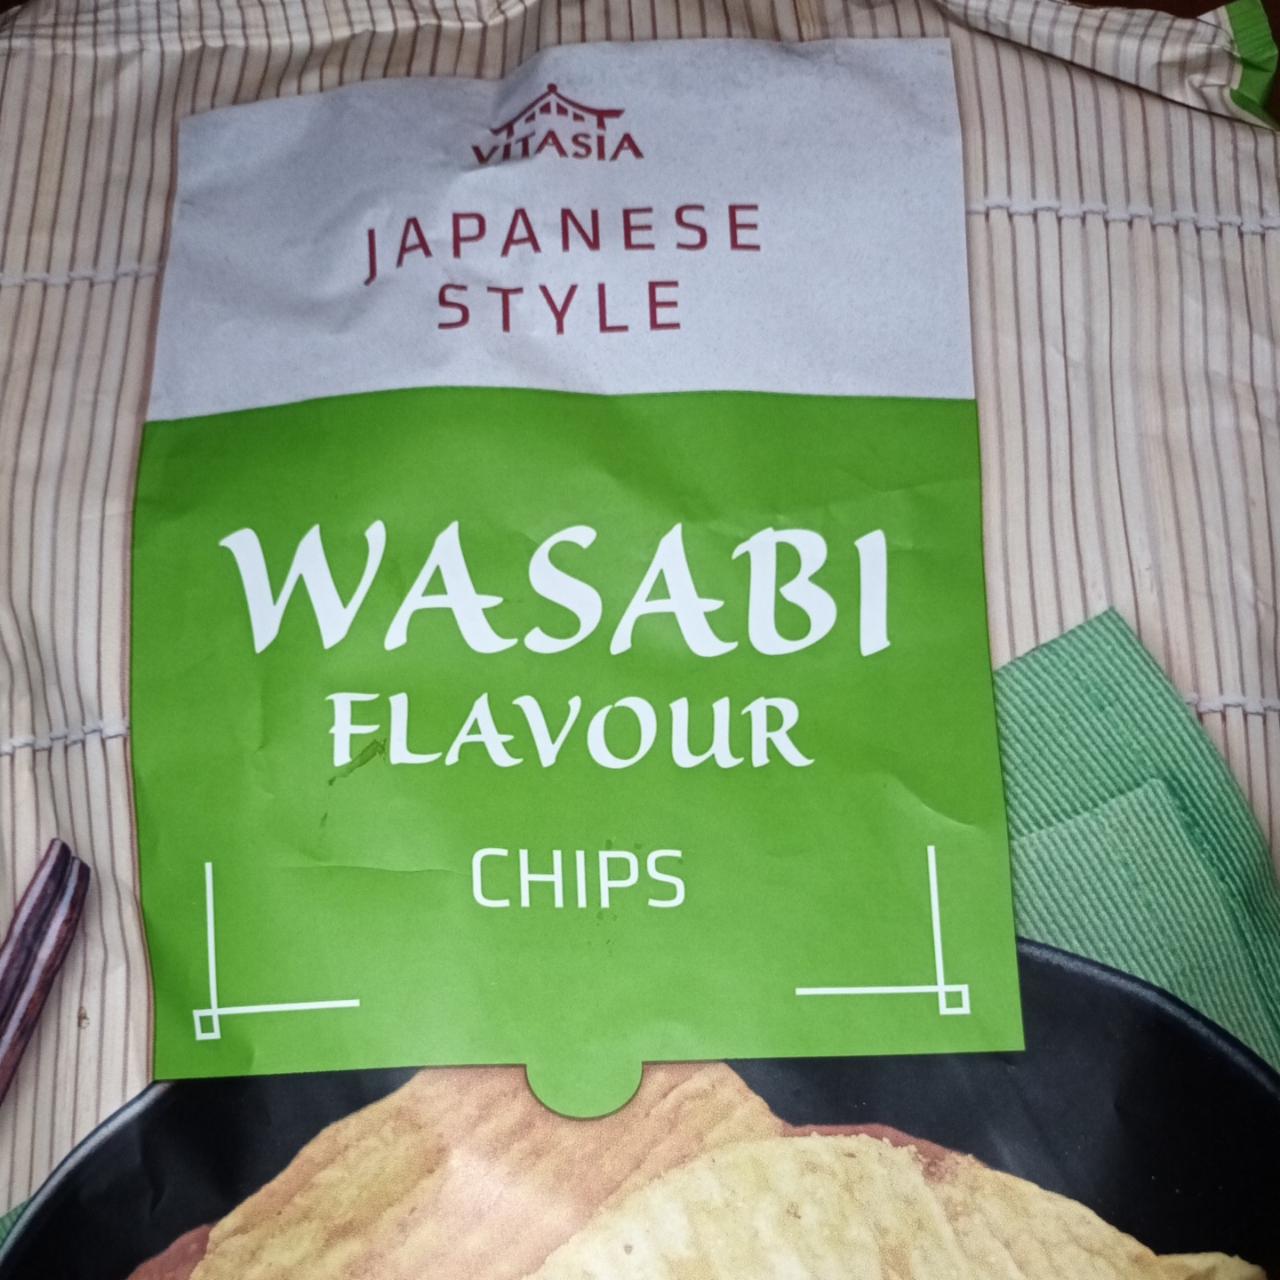 Fotografie - Wasabi flavour chips Vitasia Japanese style